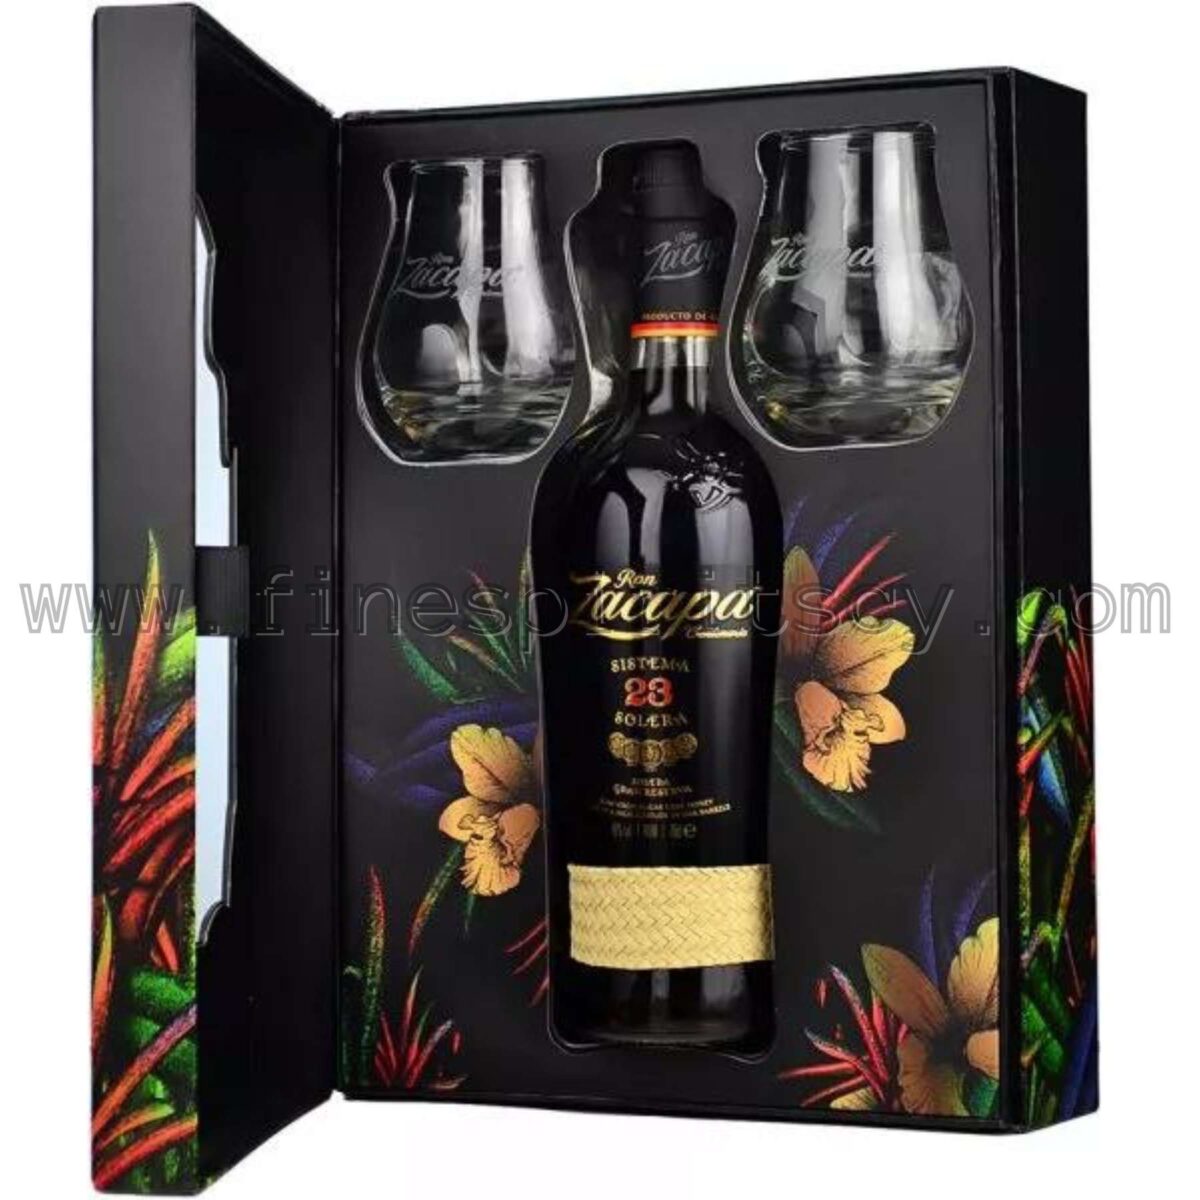 Ron Zacapa 23 Centenario Solera Gift Set Open Box With 2 Glasses Price FSCY